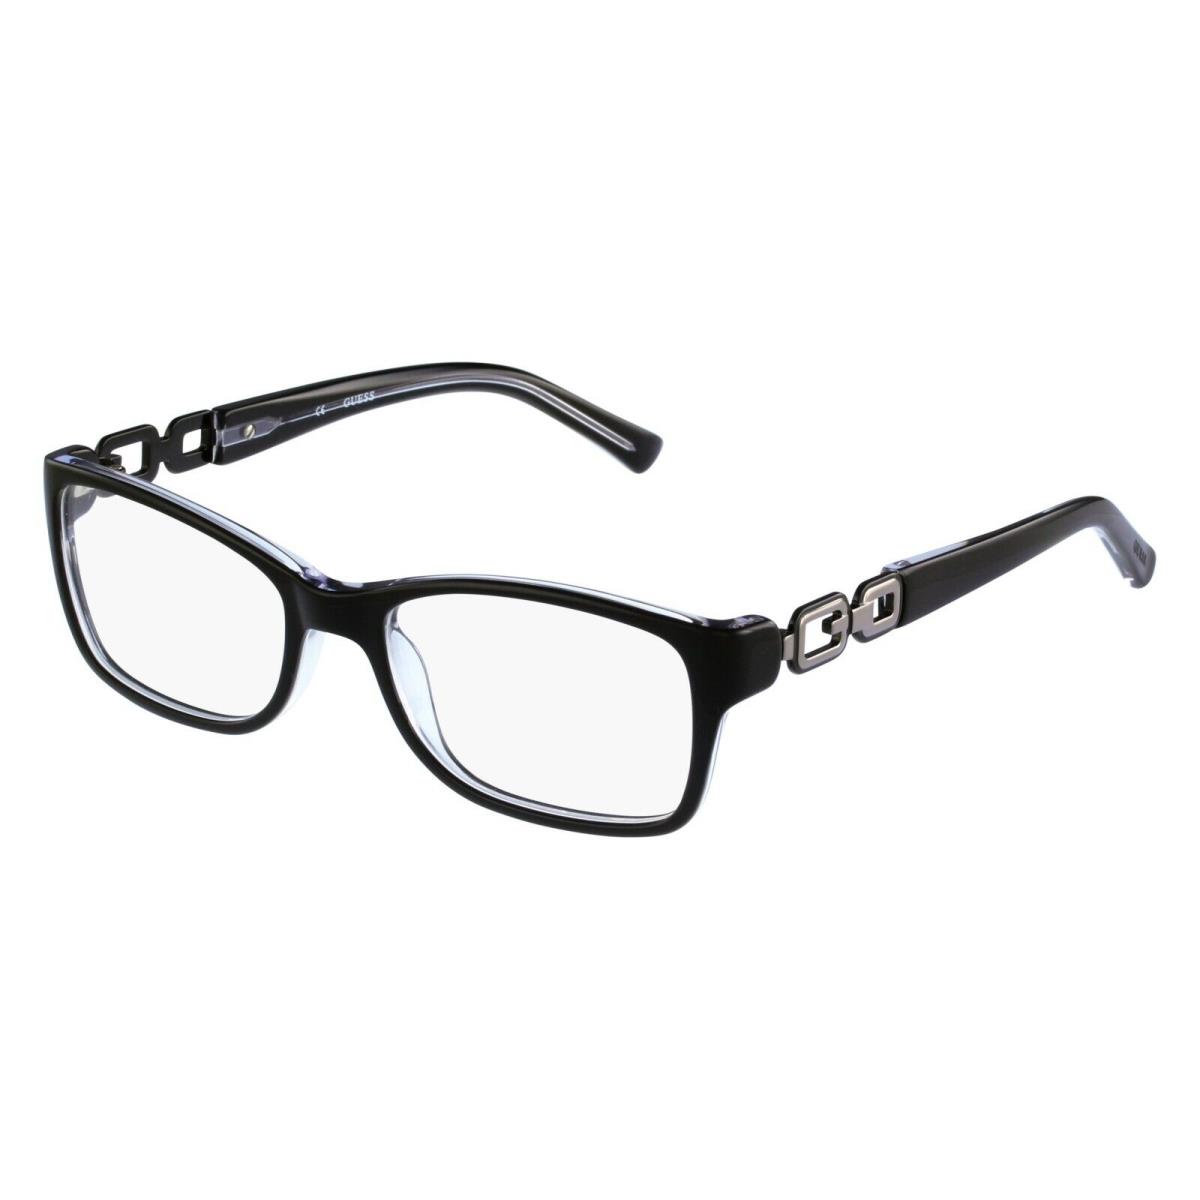 Guess GU2406 Black Blk Plastic Optical Eyeglasses Frame 52-17-135 GU 2406 RX AB